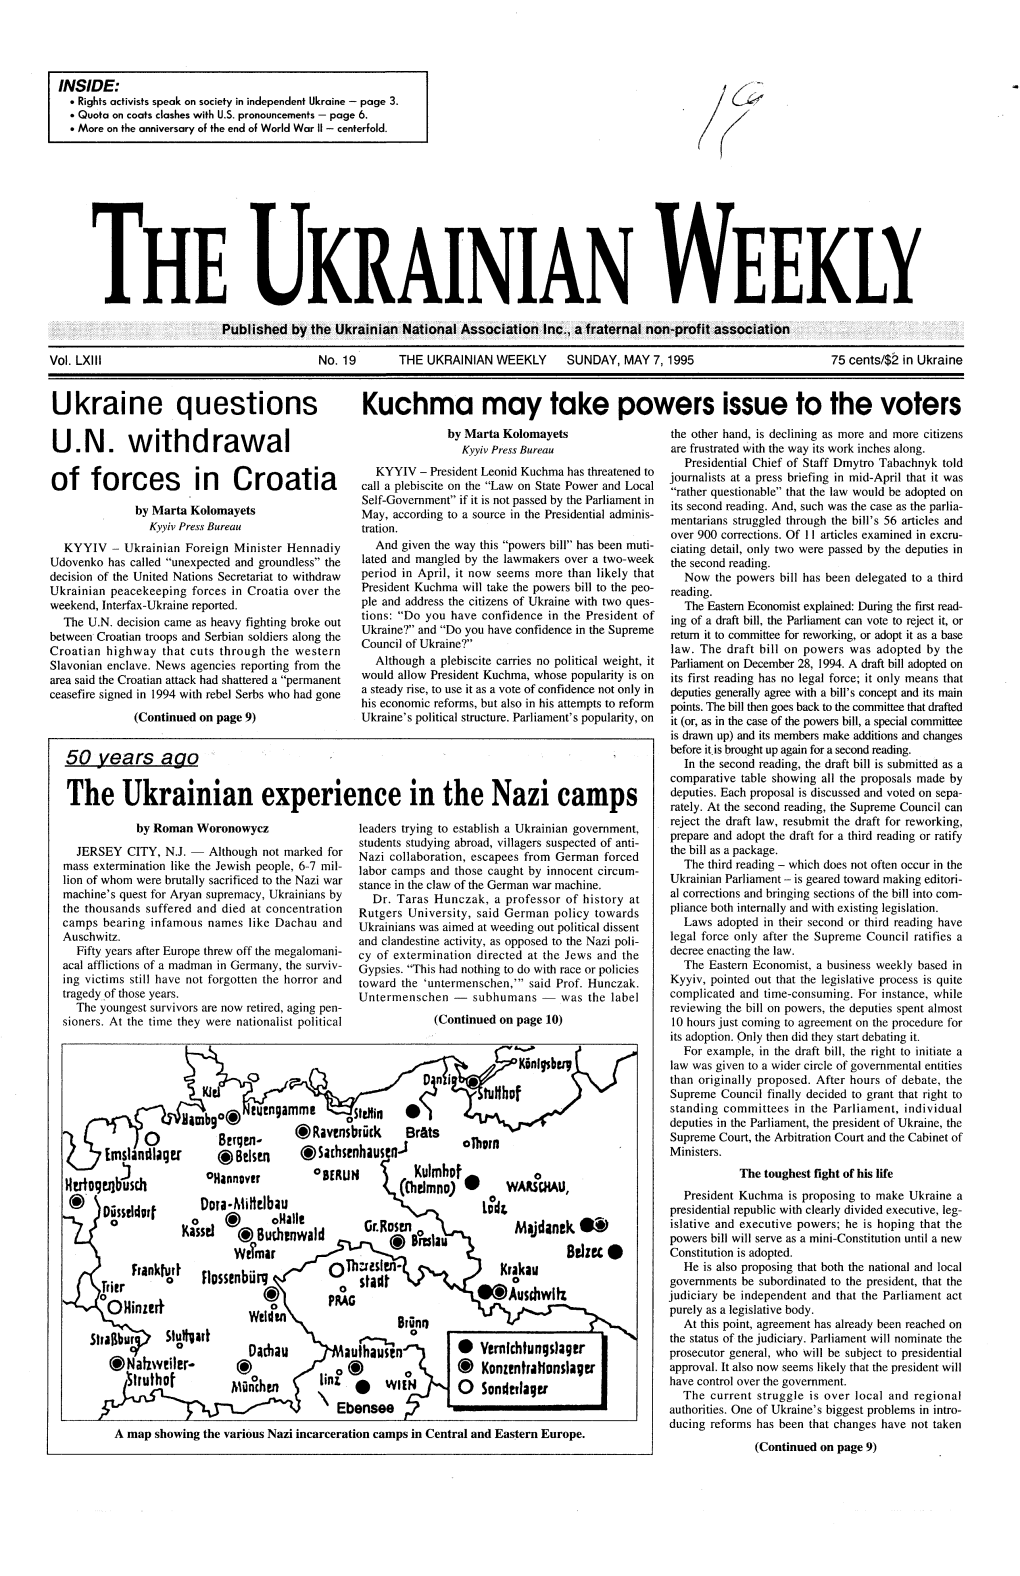 The Ukrainian Weekly 1995, No.19